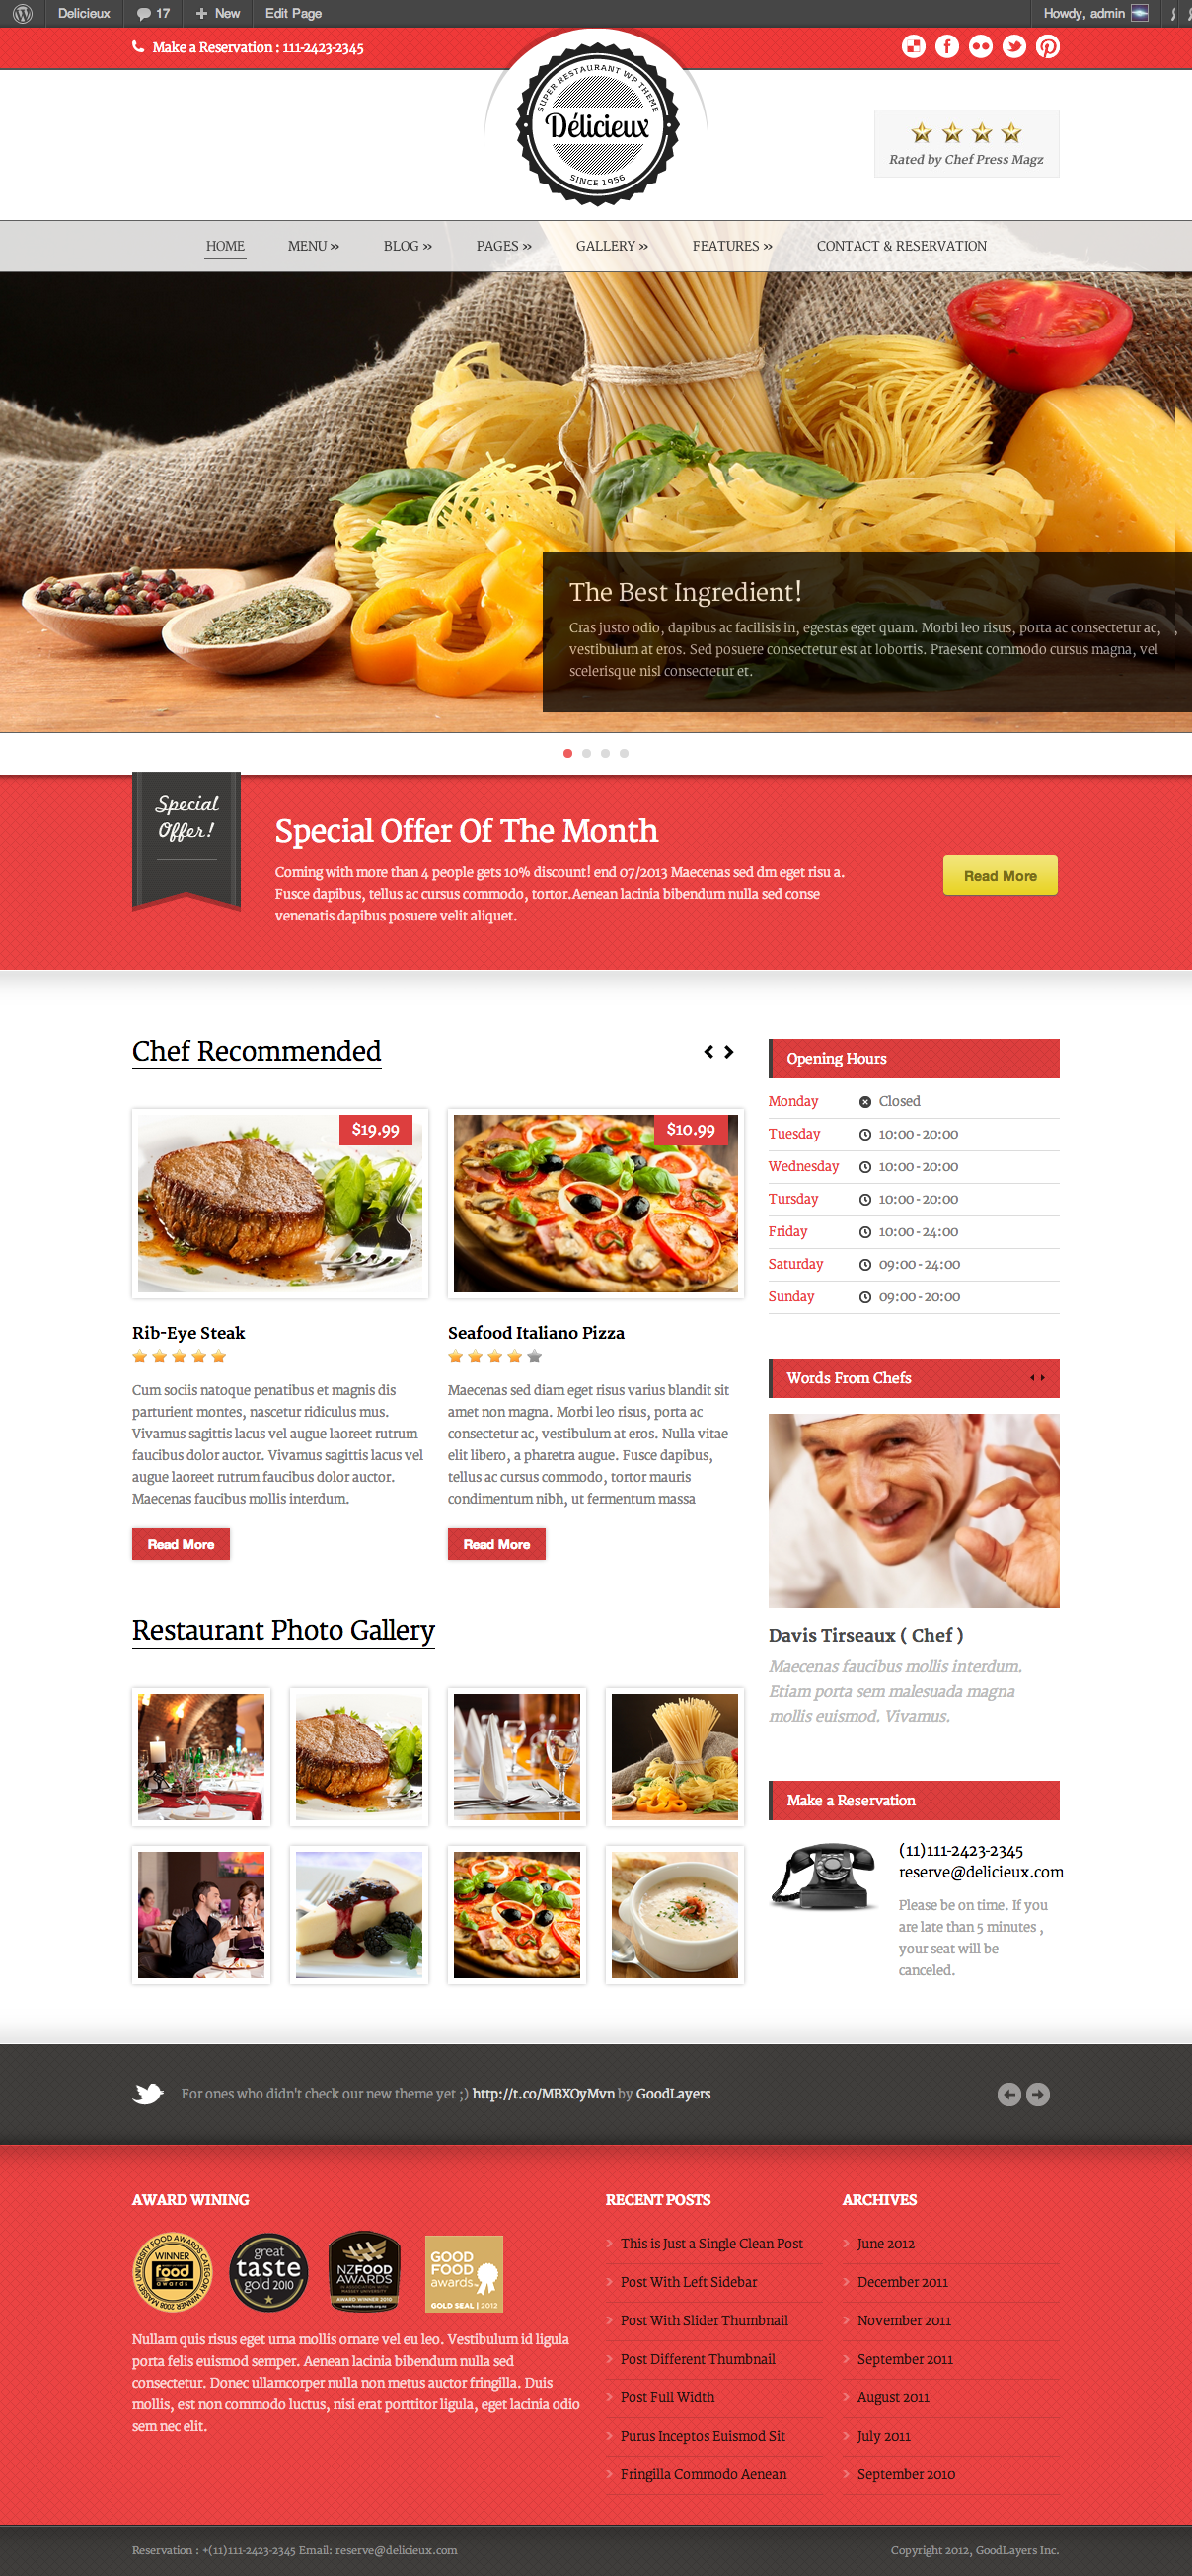 Page image of a beautiful restaurant theme WordPress template.